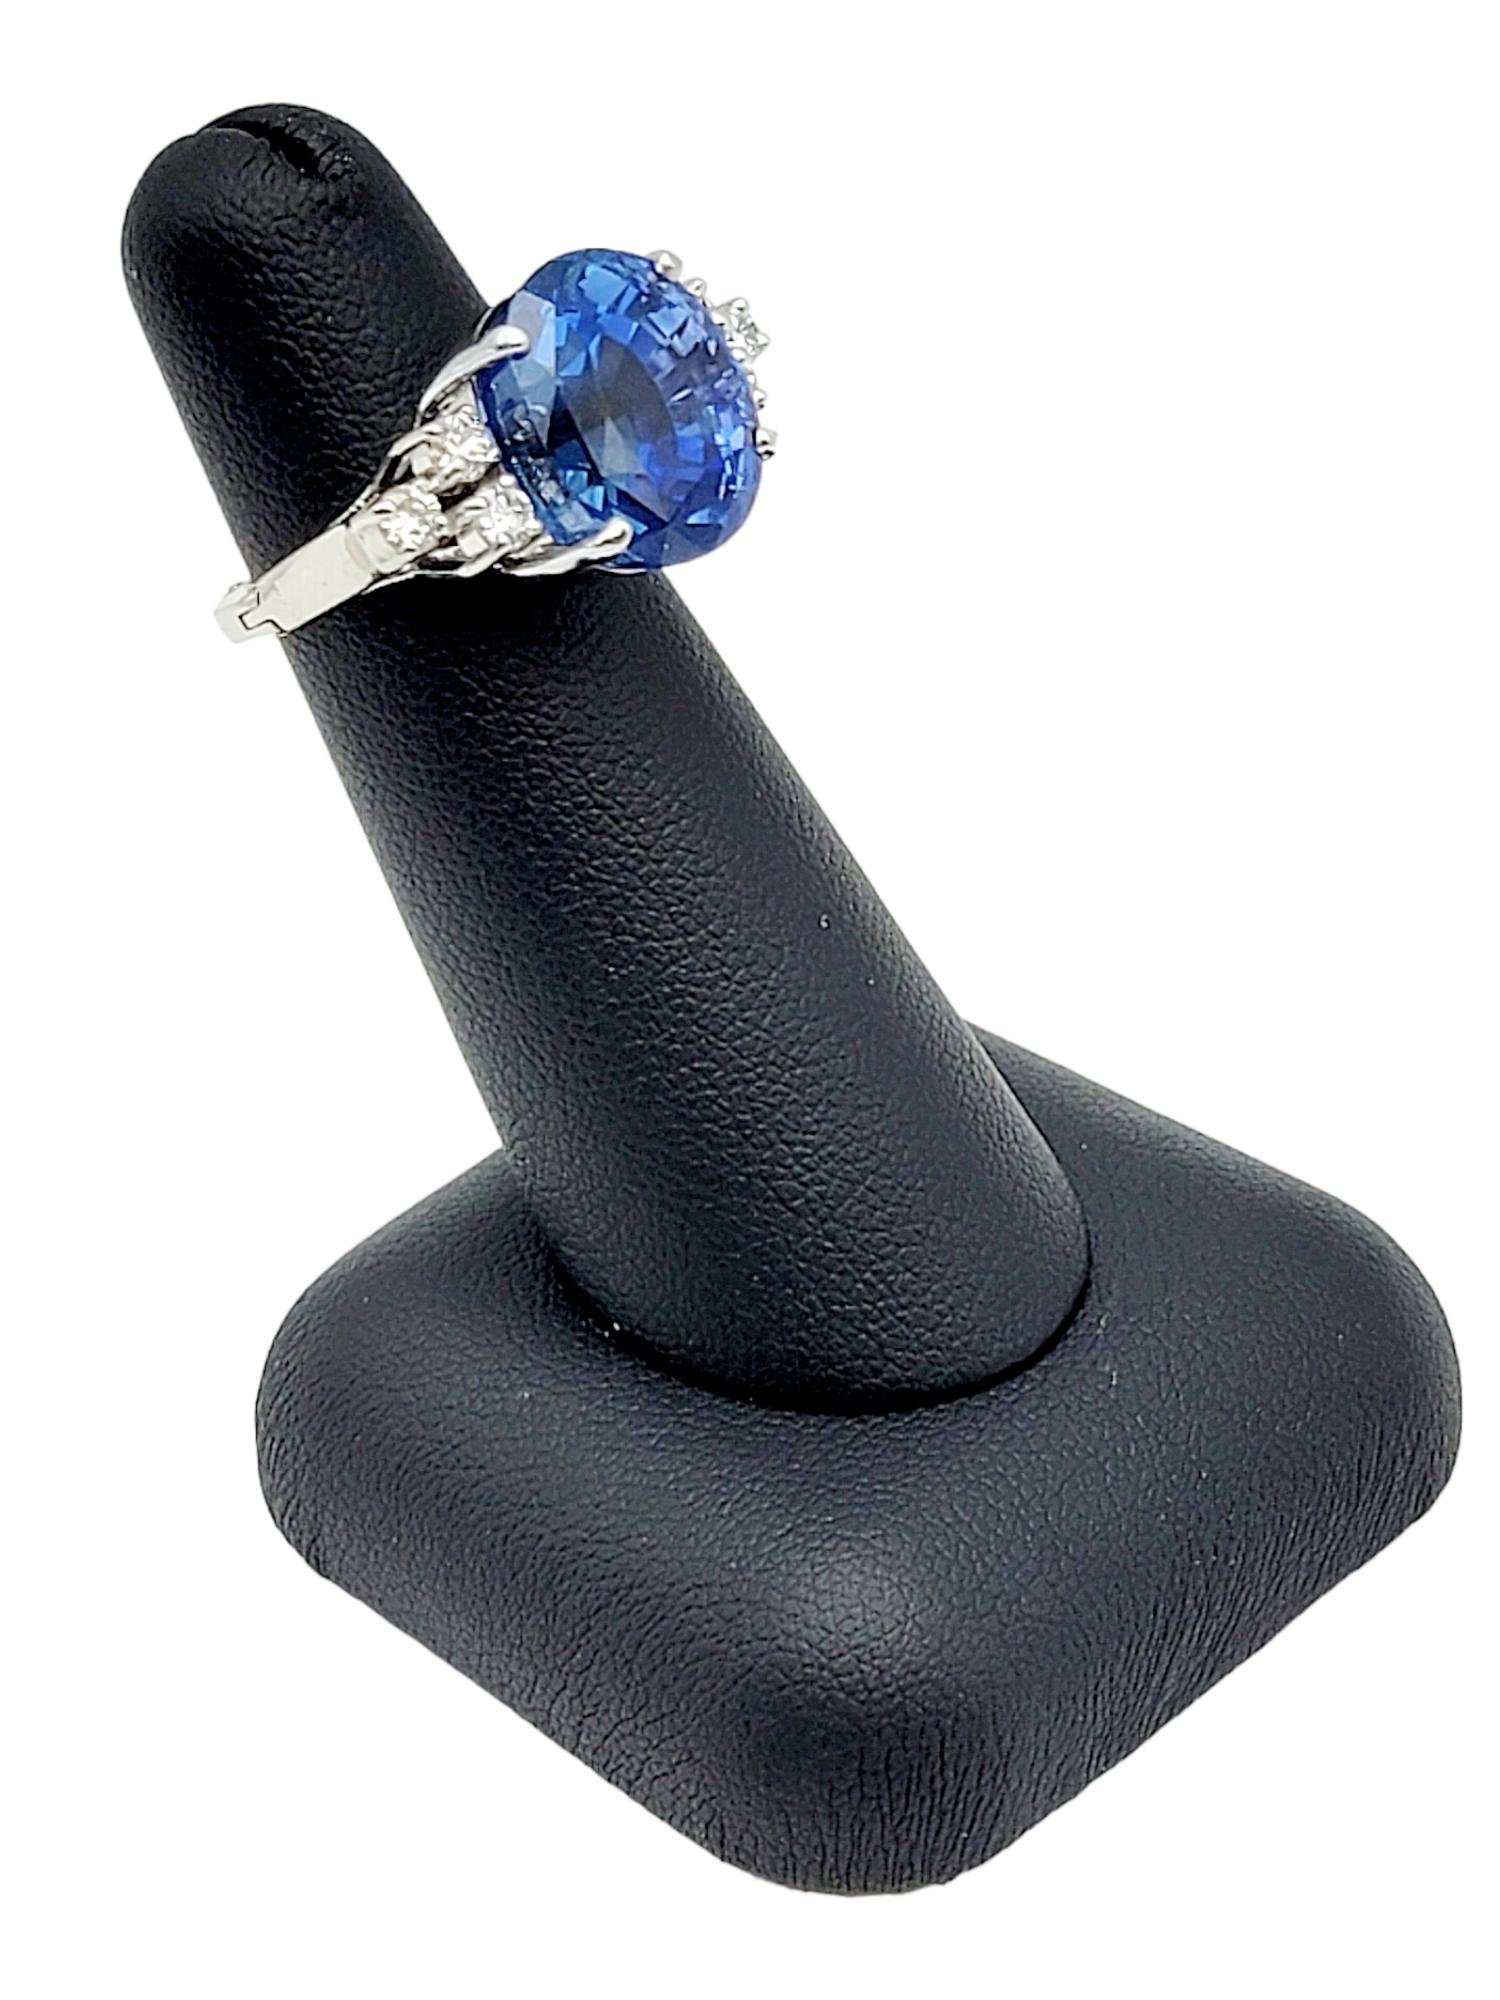 Impressive 15.35 Carat Rare Untreated Oval Ceylon Sapphire and Diamond Ring For Sale 8